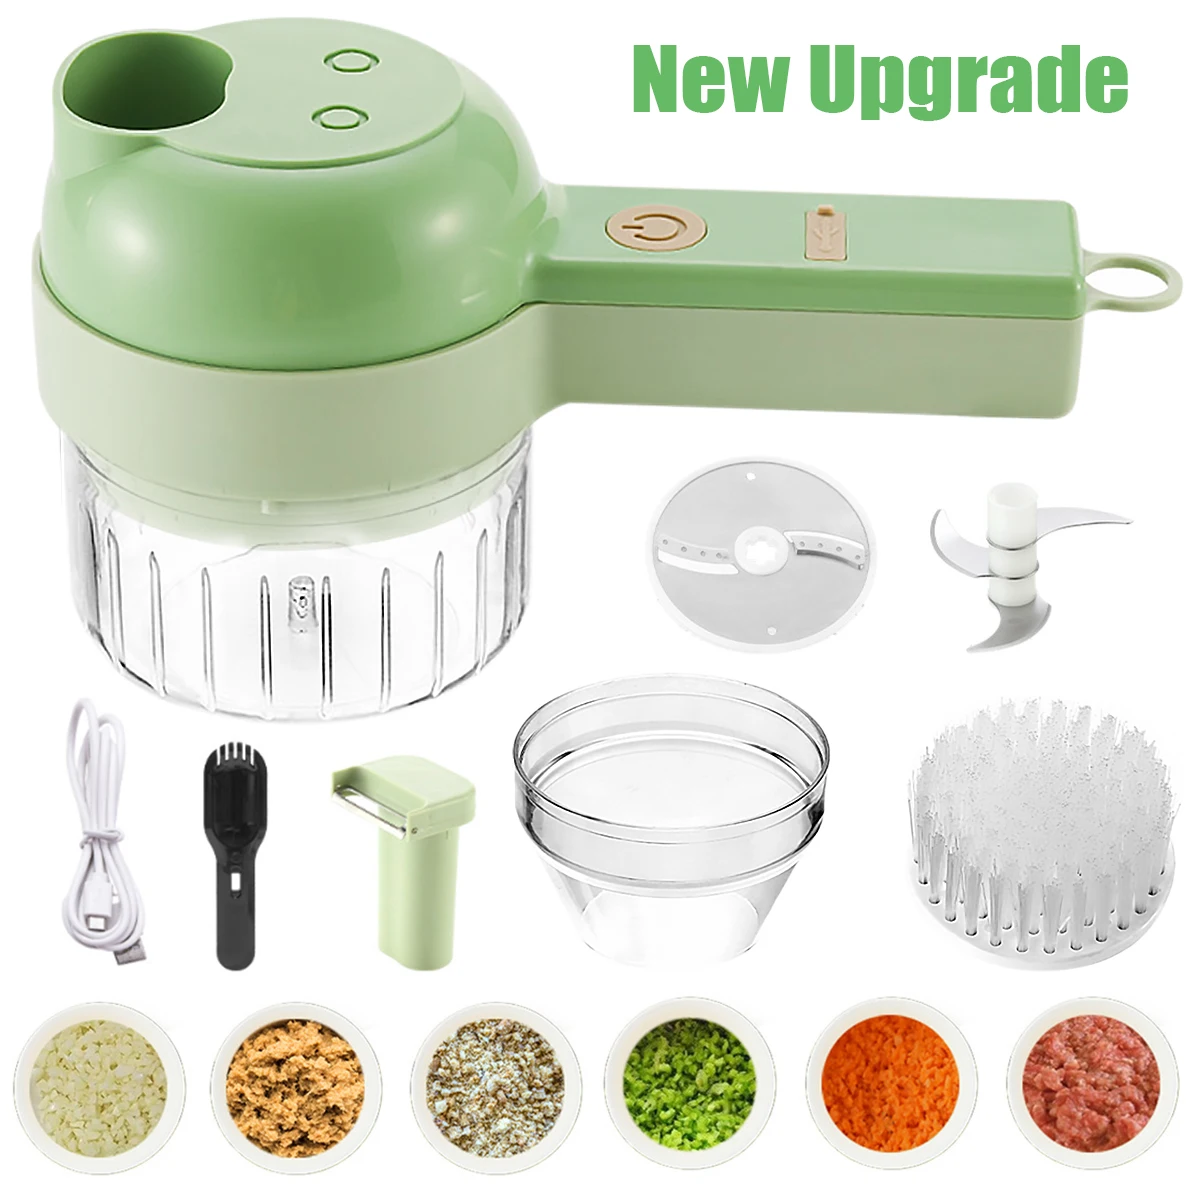 New Upgraded Electric Food Chopper Vegetable Chopper Vegetable Slicer Garlic Crusher Meat Grinder Machine Peeler Kitchen Tools